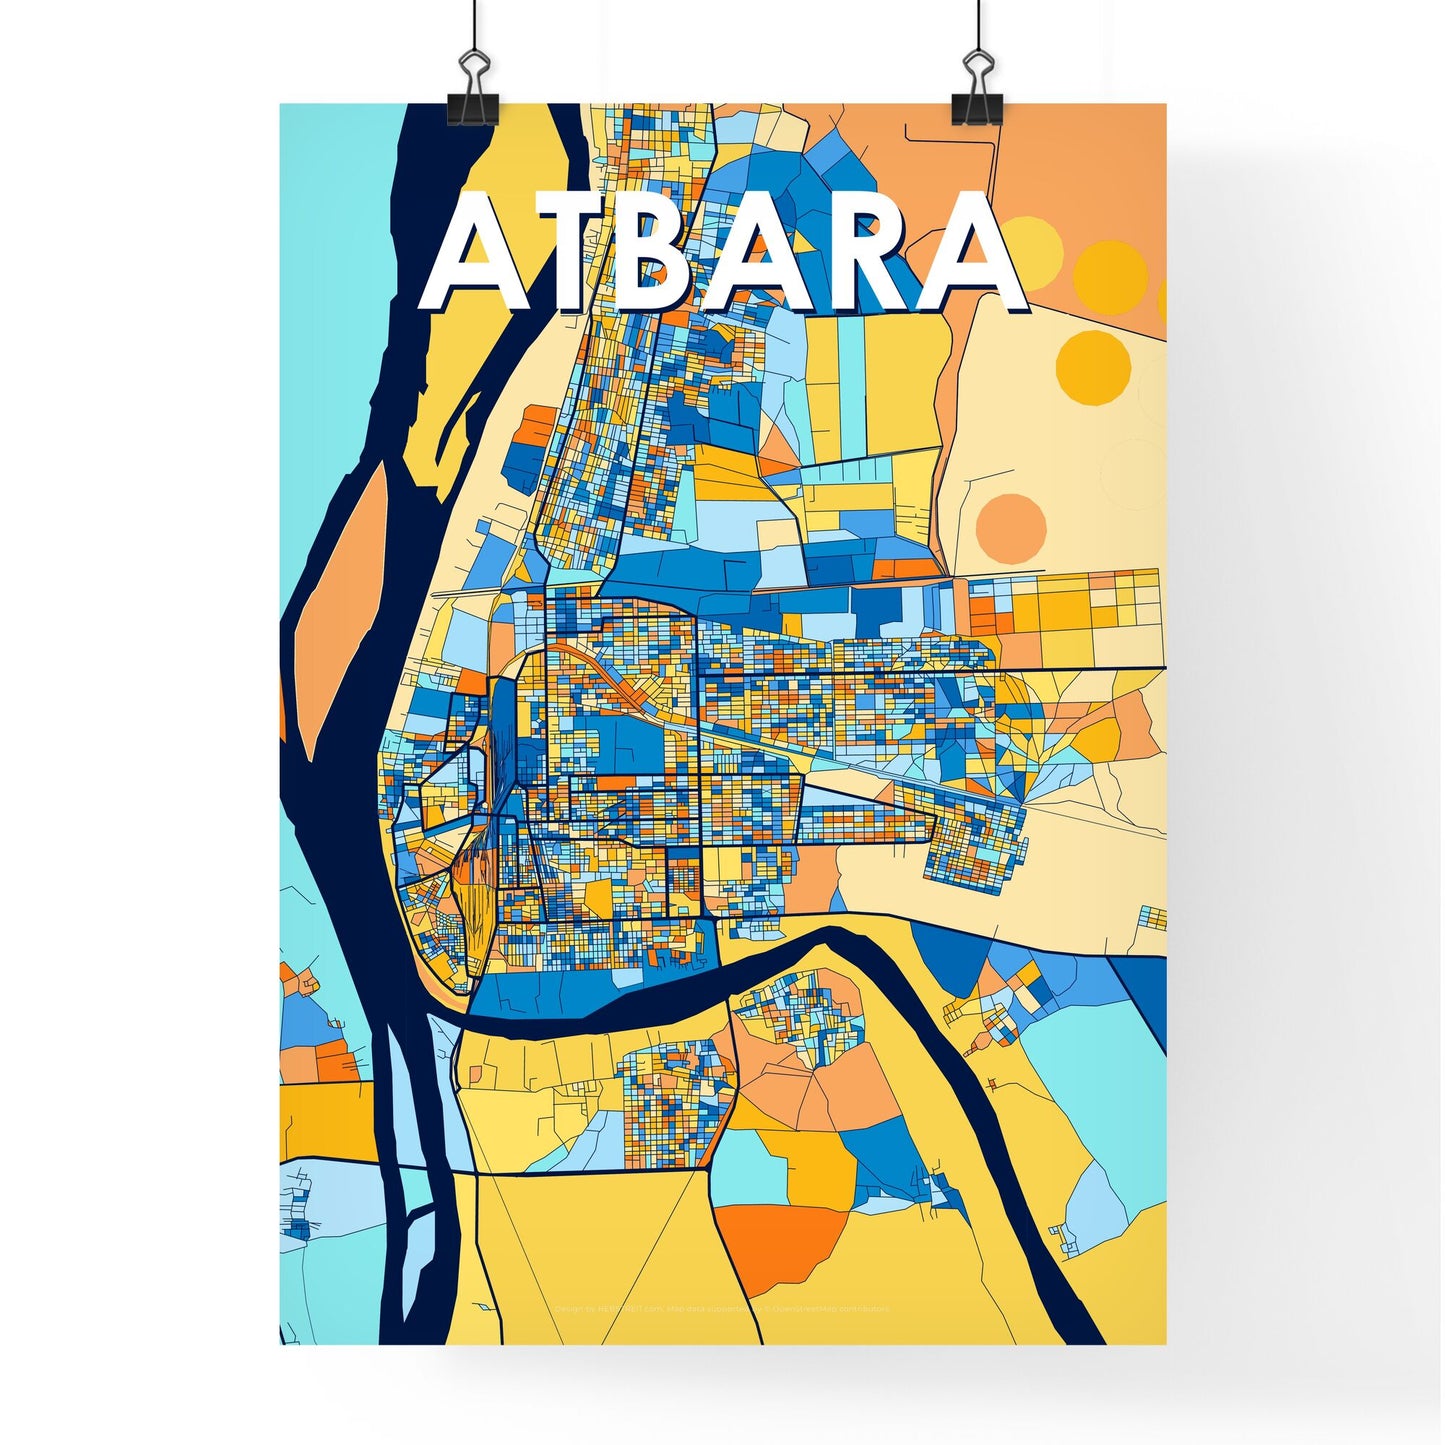 ATBARA SUDAN Vibrant Colorful Art Map Poster Blue Orange